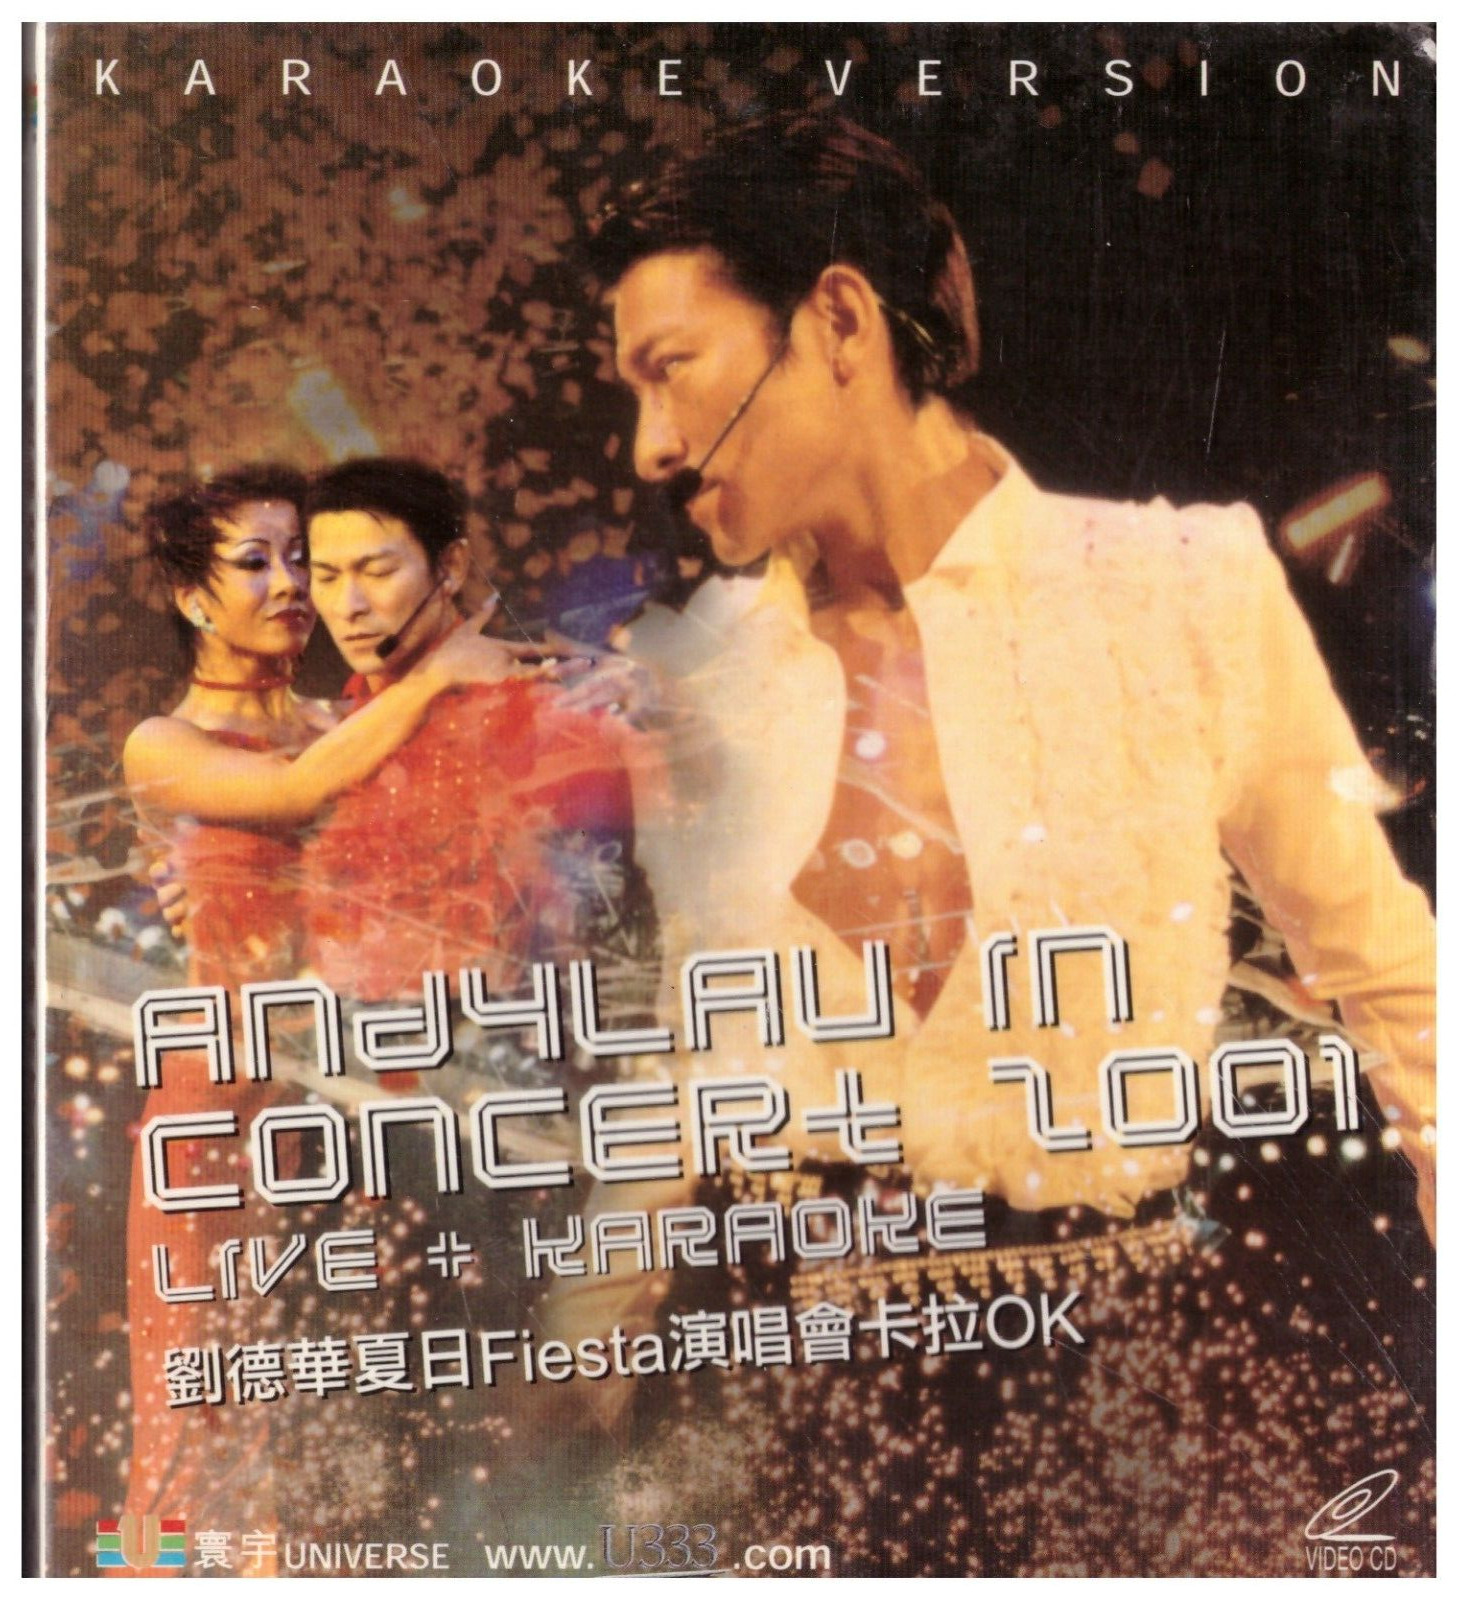 Andylau in concert 100 karaoke Live 劉德華夏日Fiesta演唱會卡拉OK [2 VCDs set] Chinese